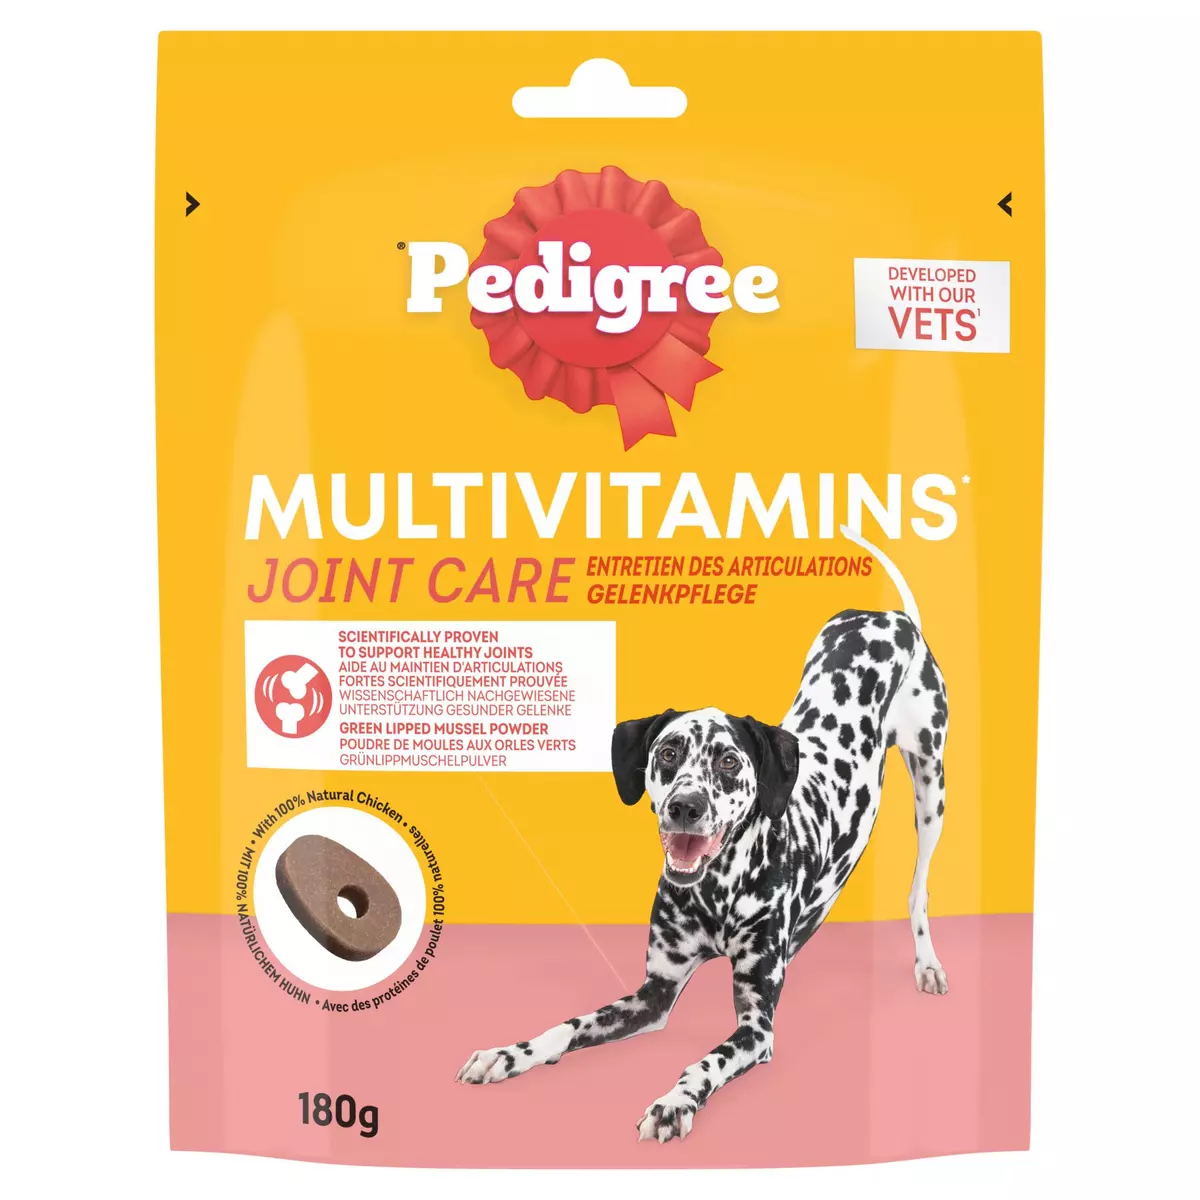 PEDIGREE Multi-vitamins entretien des articulations pour chien 180g